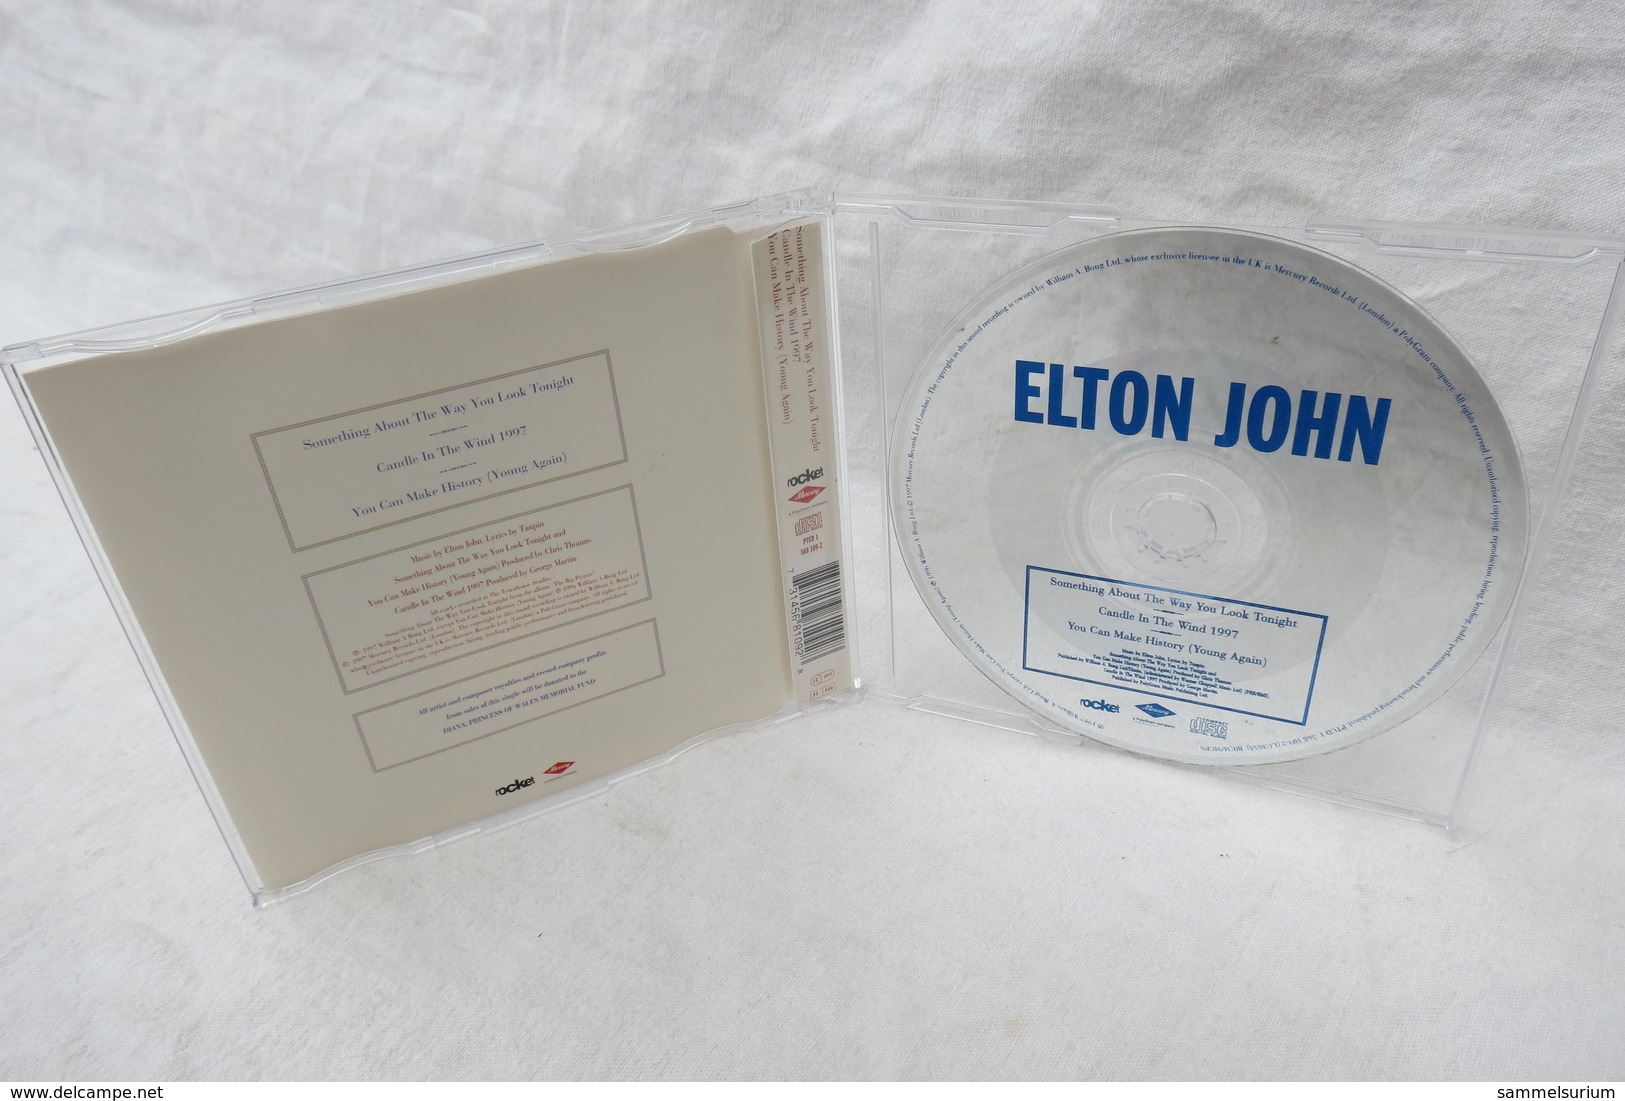 Maxi CD "Elton John" Candle In The Wind - Disco, Pop